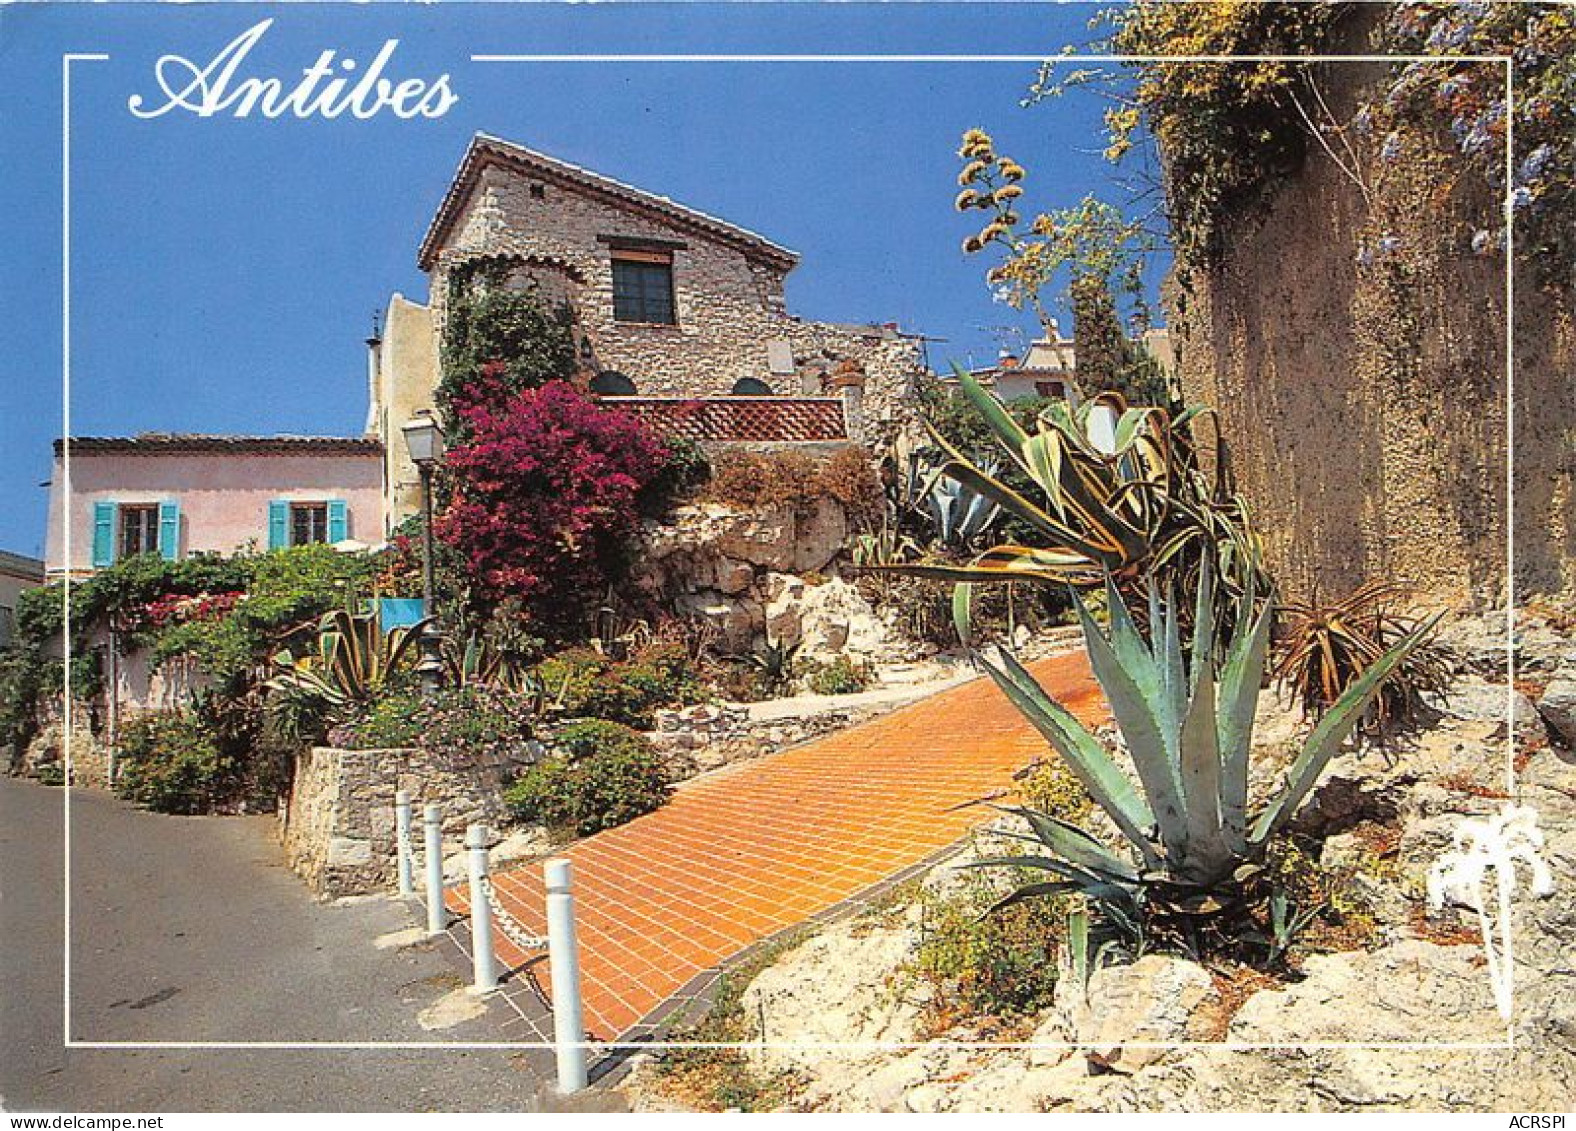 ANTIBES Villa KAZANTZAKI Vieil Antibes 29(scan Recto-verso) MA1175 - Antibes - Altstadt